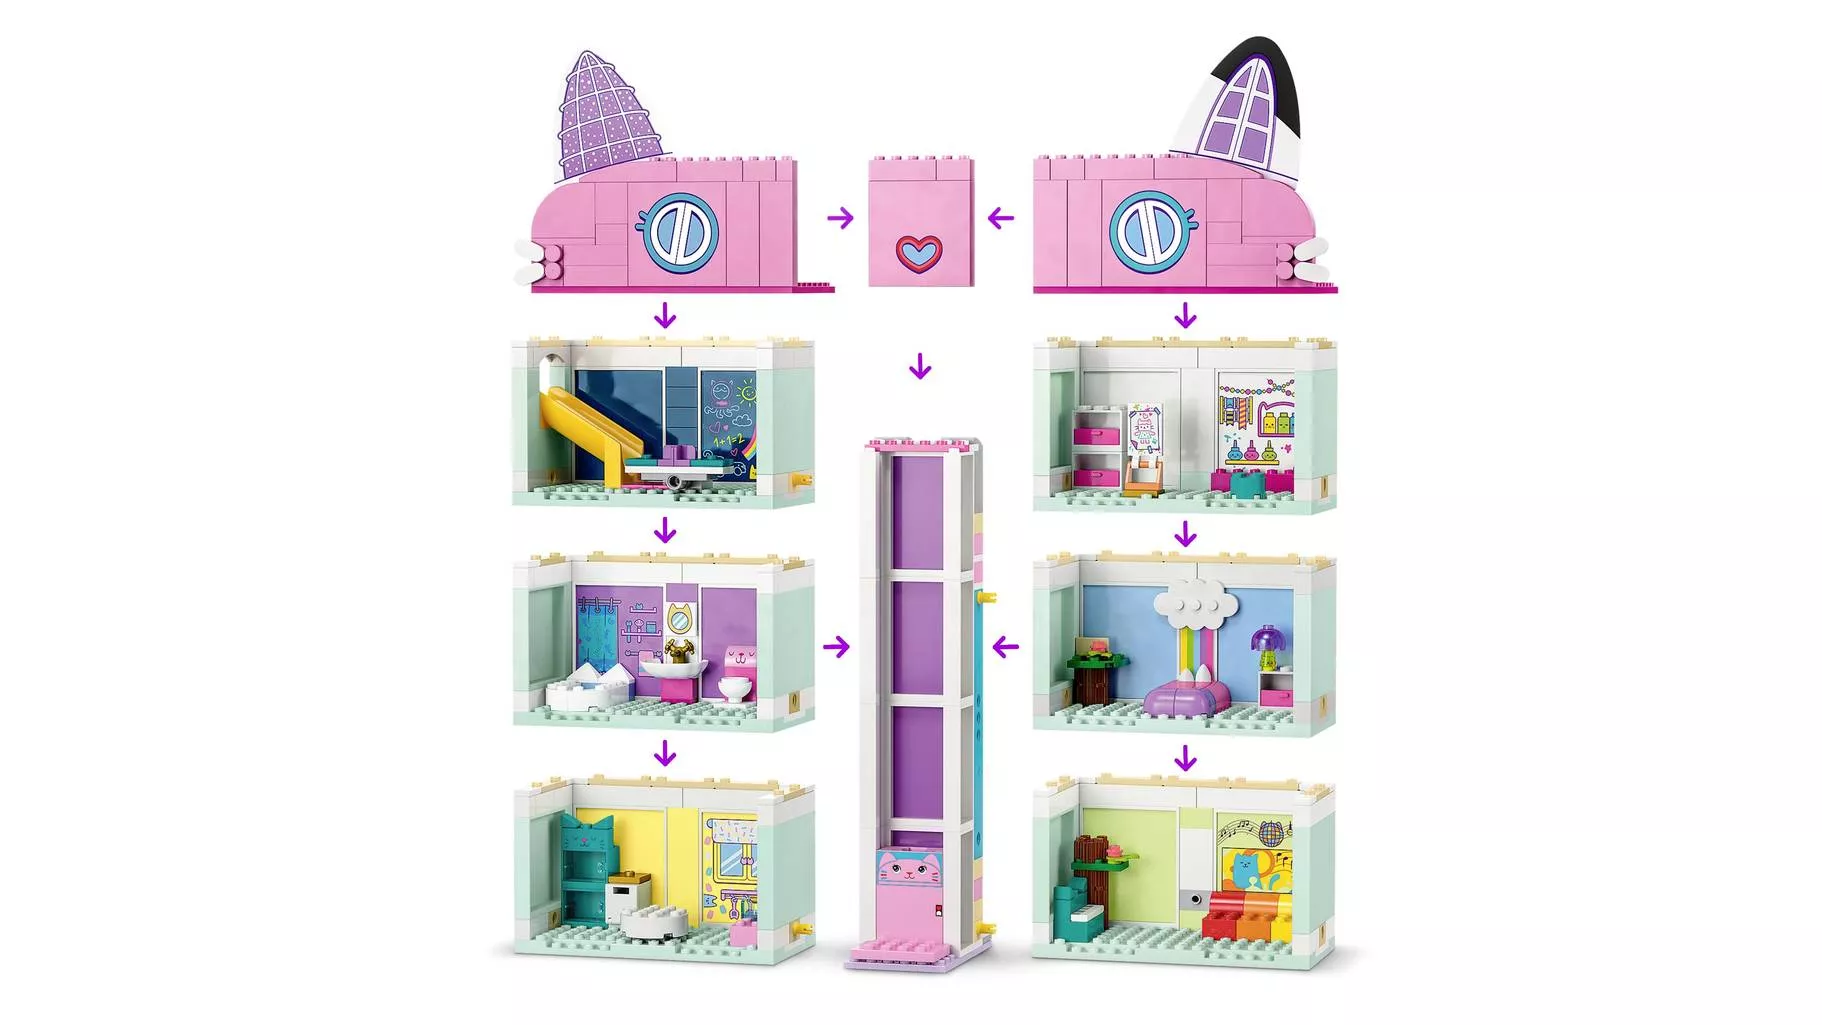 LEGO 10788 Gabby’s Dollhouse Gabbys Puppenhaus